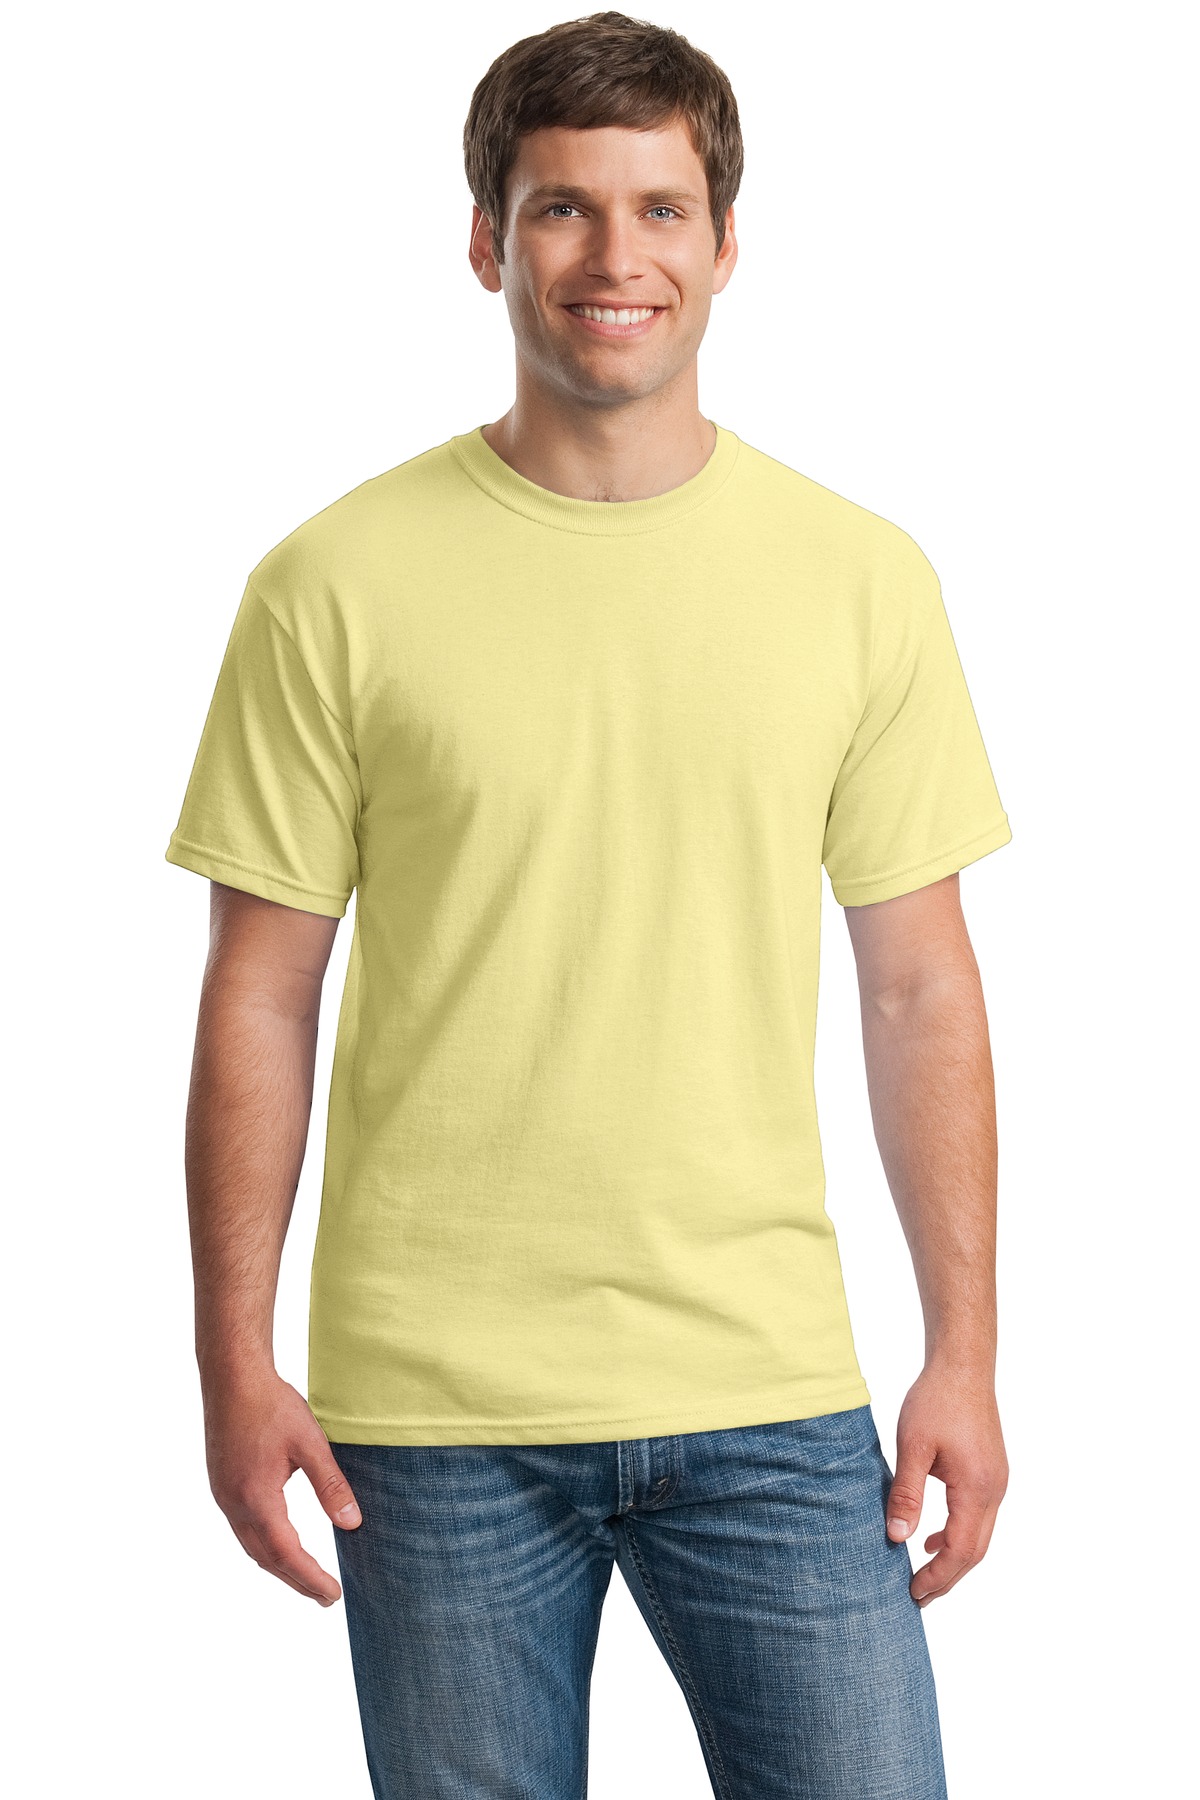 https://images.shirtspace.com/fullsize/6XV4U0Lym4C2p3kMO247WA%3D%3D/61061/1250-gildan-g500-heavy-cotton-100-cotton-t-shirt-front-cornsilk.jpg